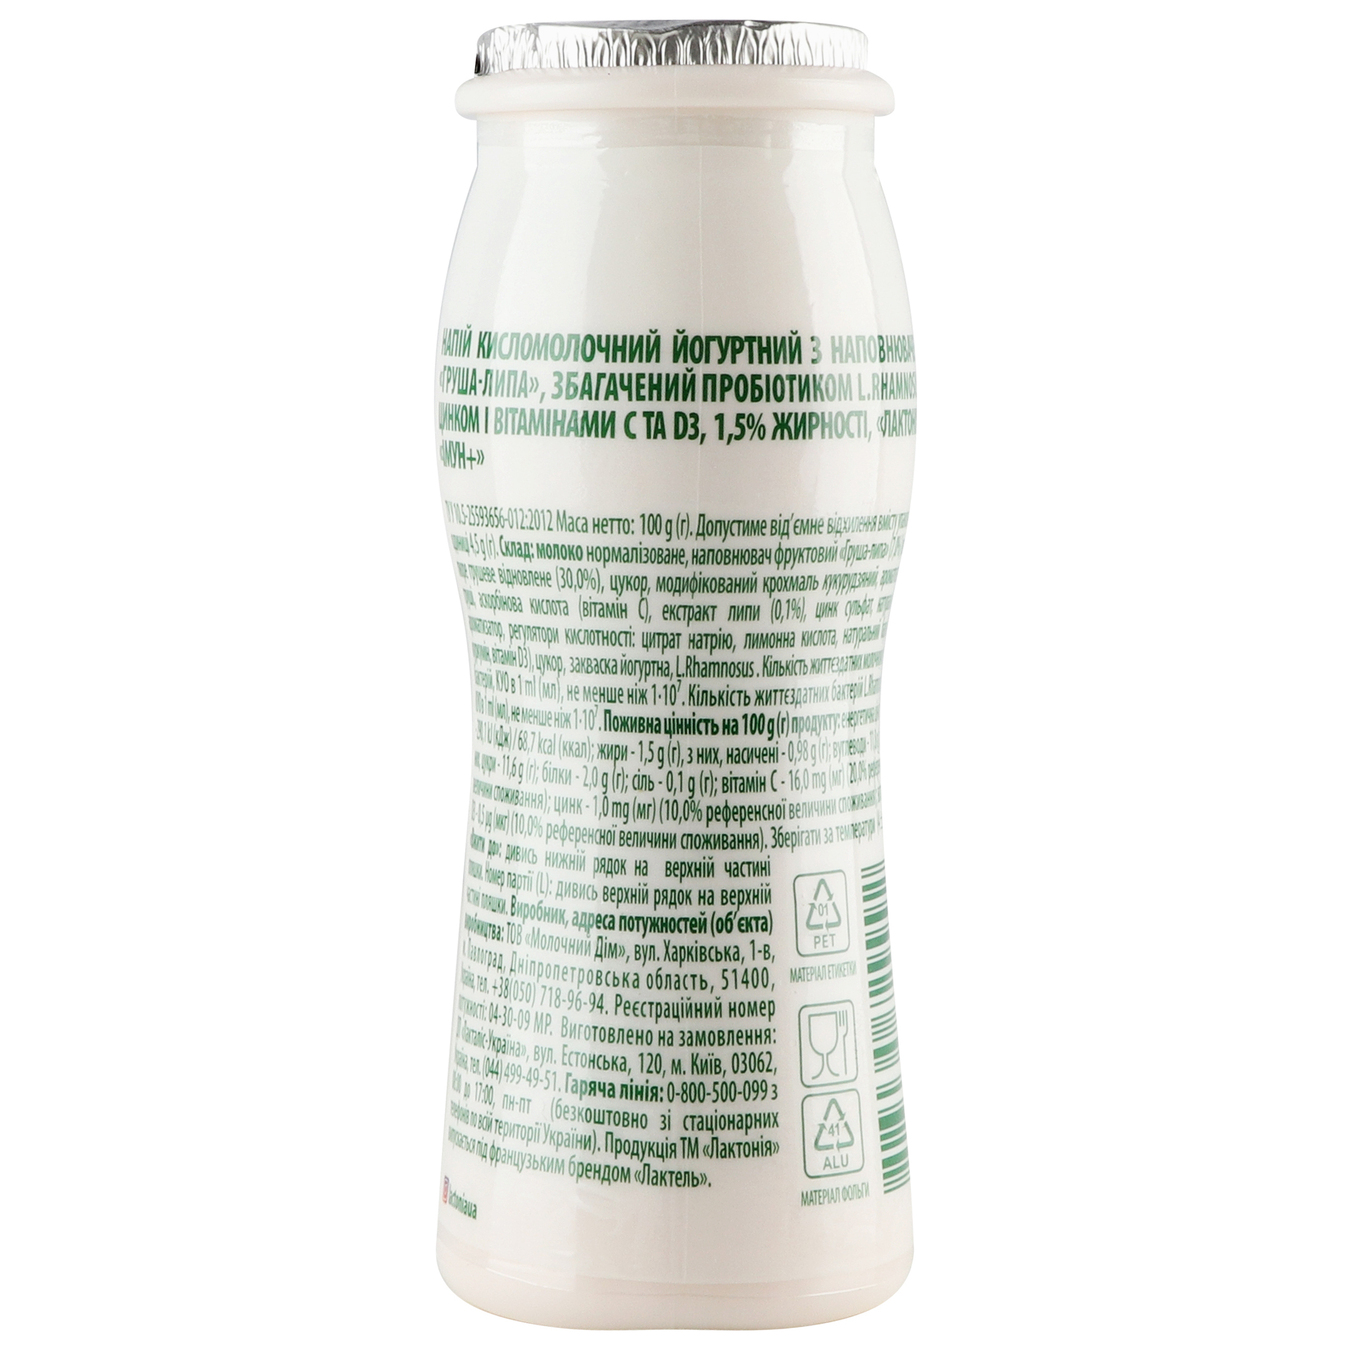 Drink Lactonia sour milk yogurt Imun + pear-linden 1.5% 100g bottle 2